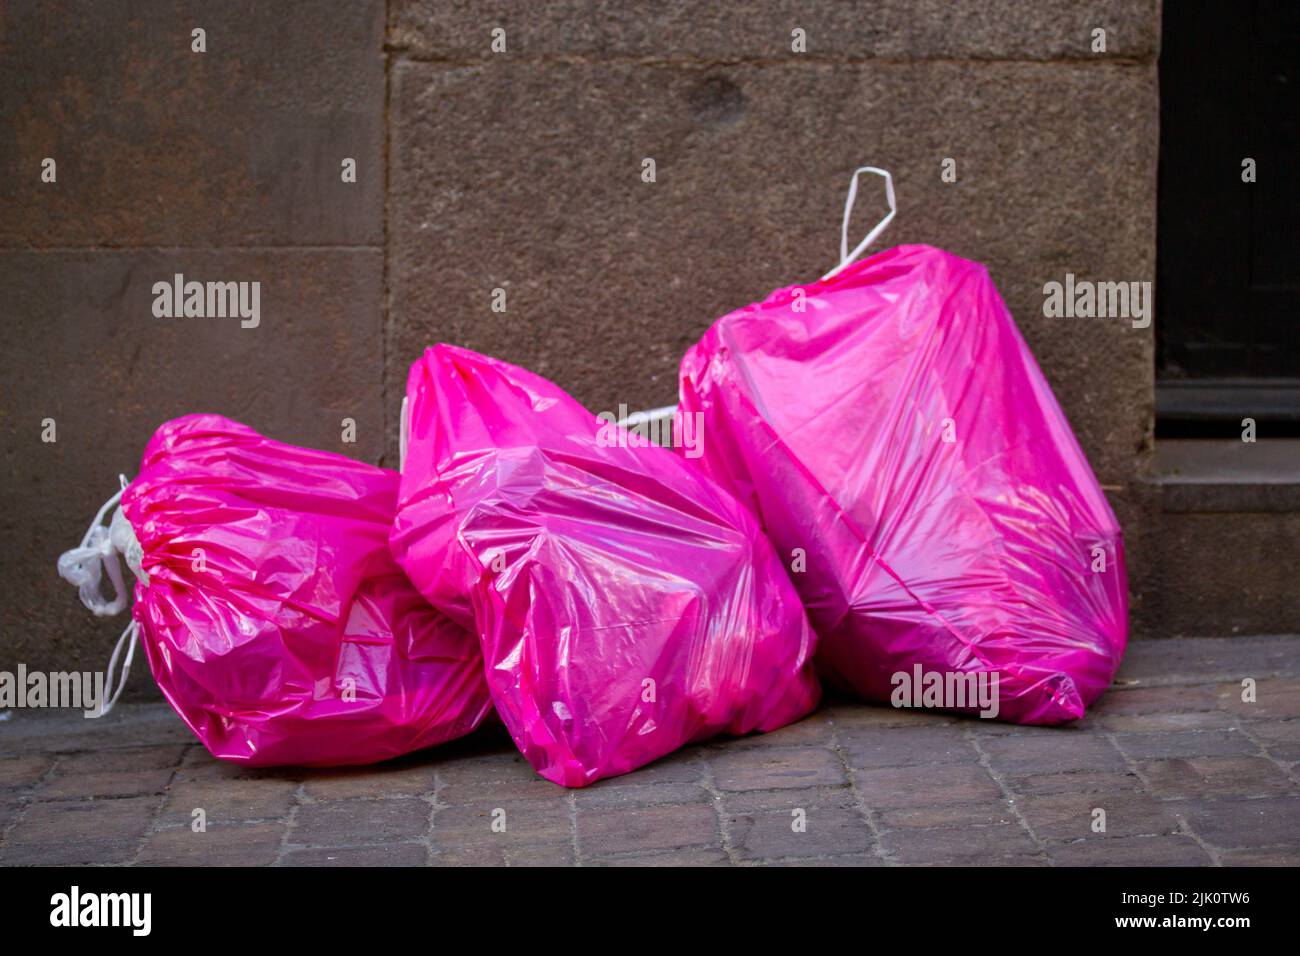 https://c8.alamy.com/comp/2JK0TW6/pile-of-pink-cellophane-garbage-bags-full-of-garbage-trash-lie-on-the-sidewalk-on-a-big-city-street-footpath-environmental-pollution-urban-ecology-p-2JK0TW6.jpg